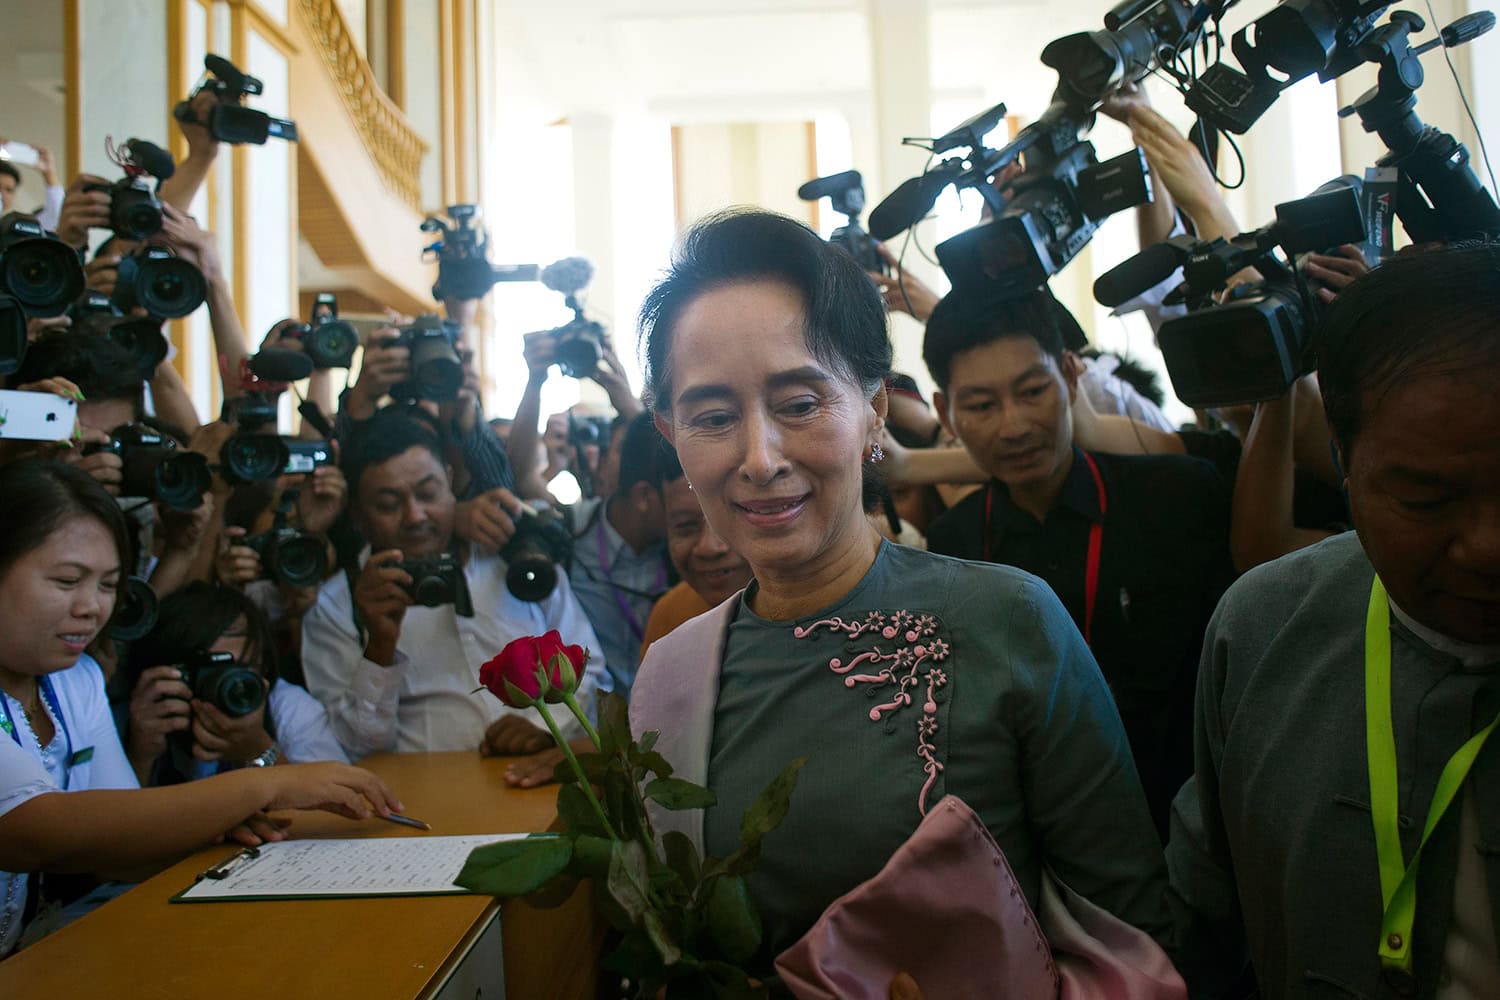 La presidenta de la Liga Nacional visita por primera vez el Parlamento birmano